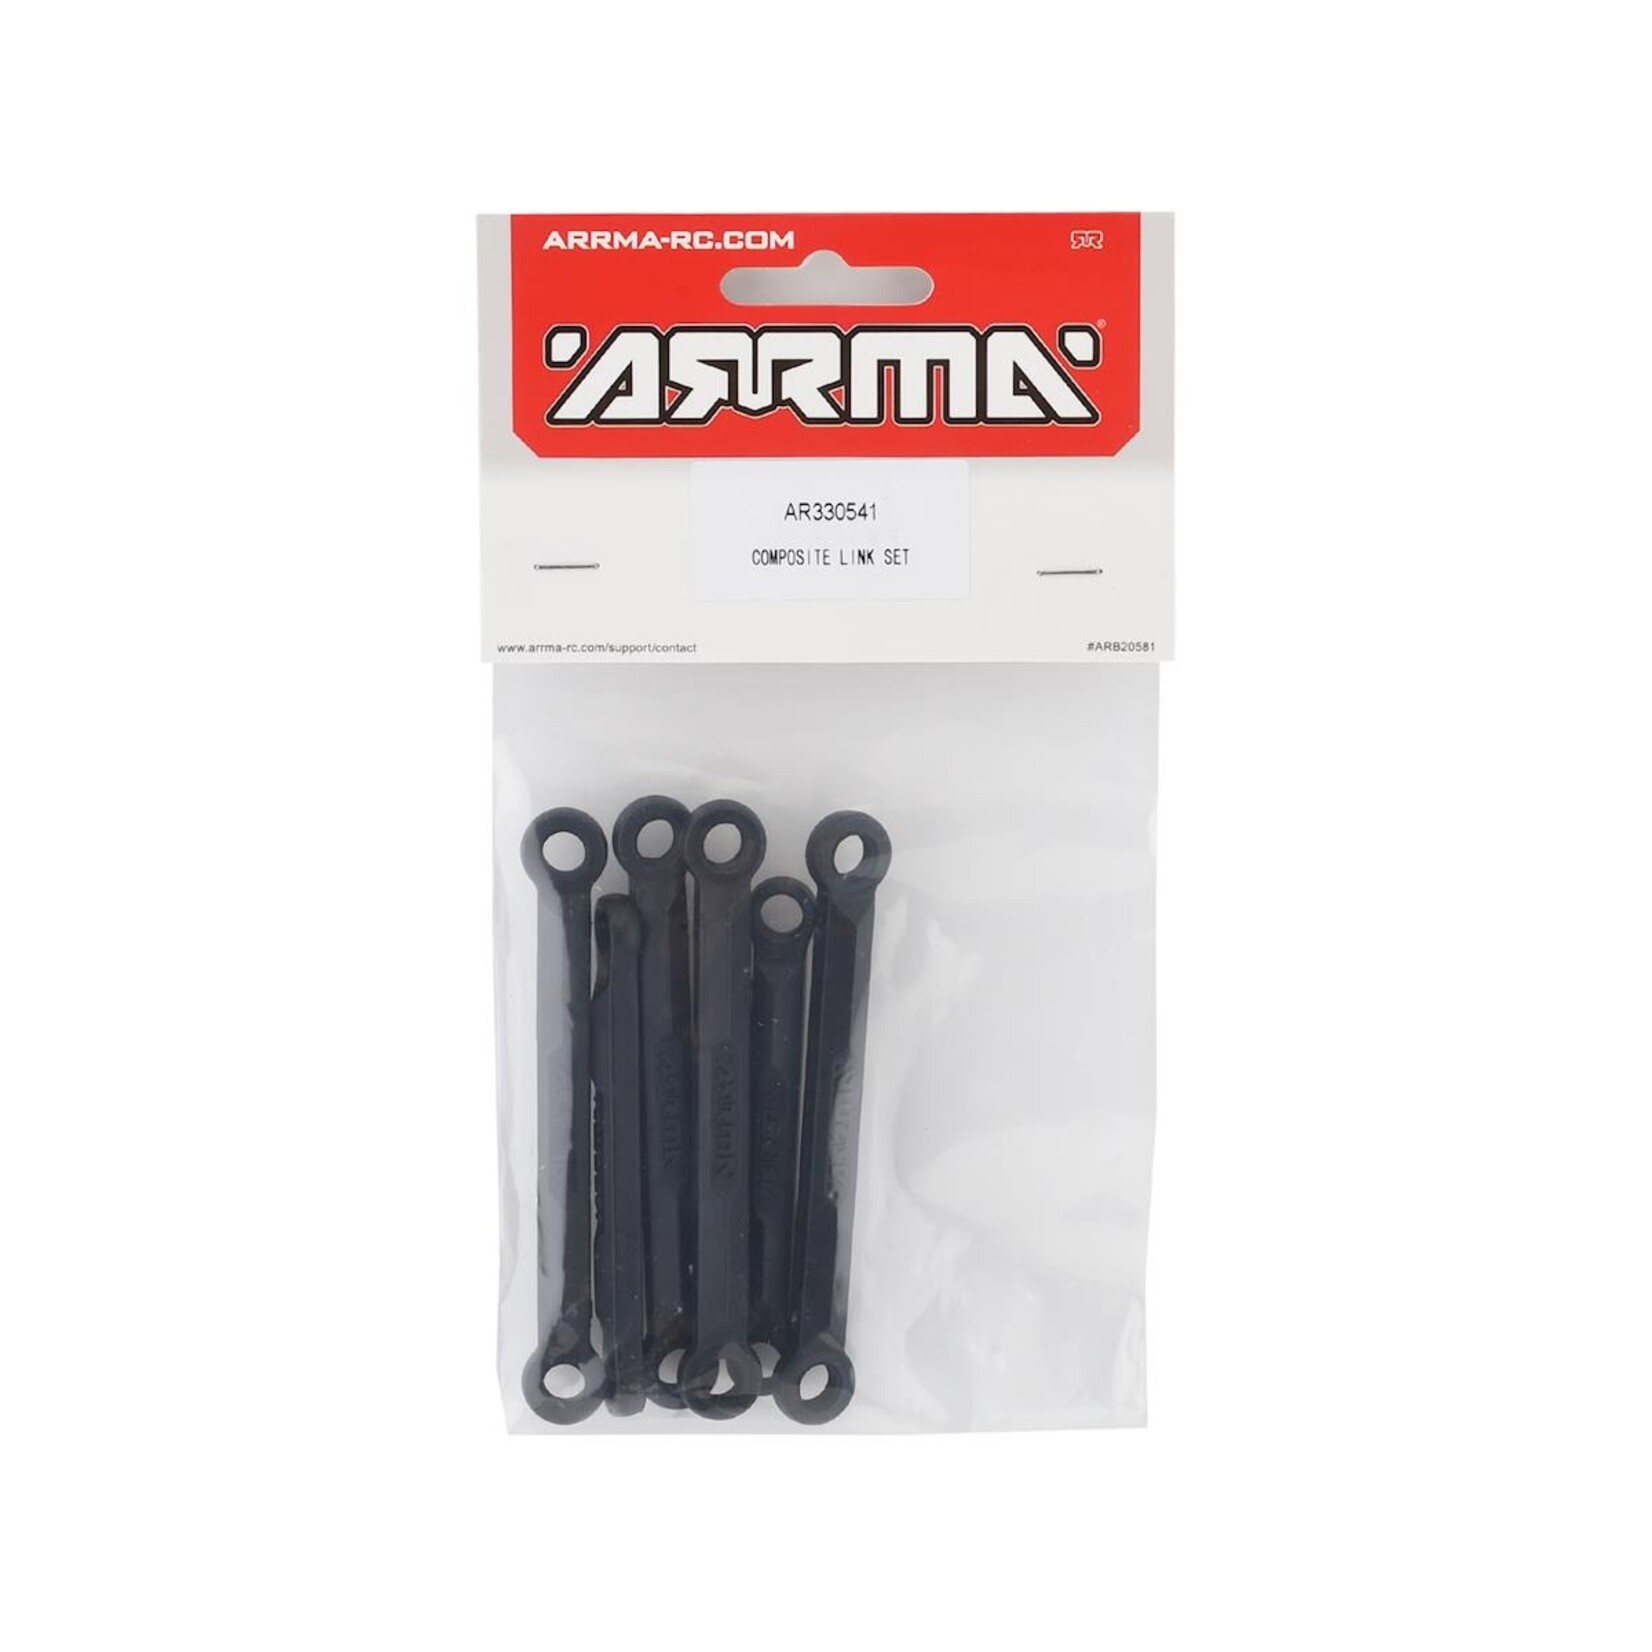 ARRMA Arrma Typhon 4x4 550 Composite Link Set #AR330541